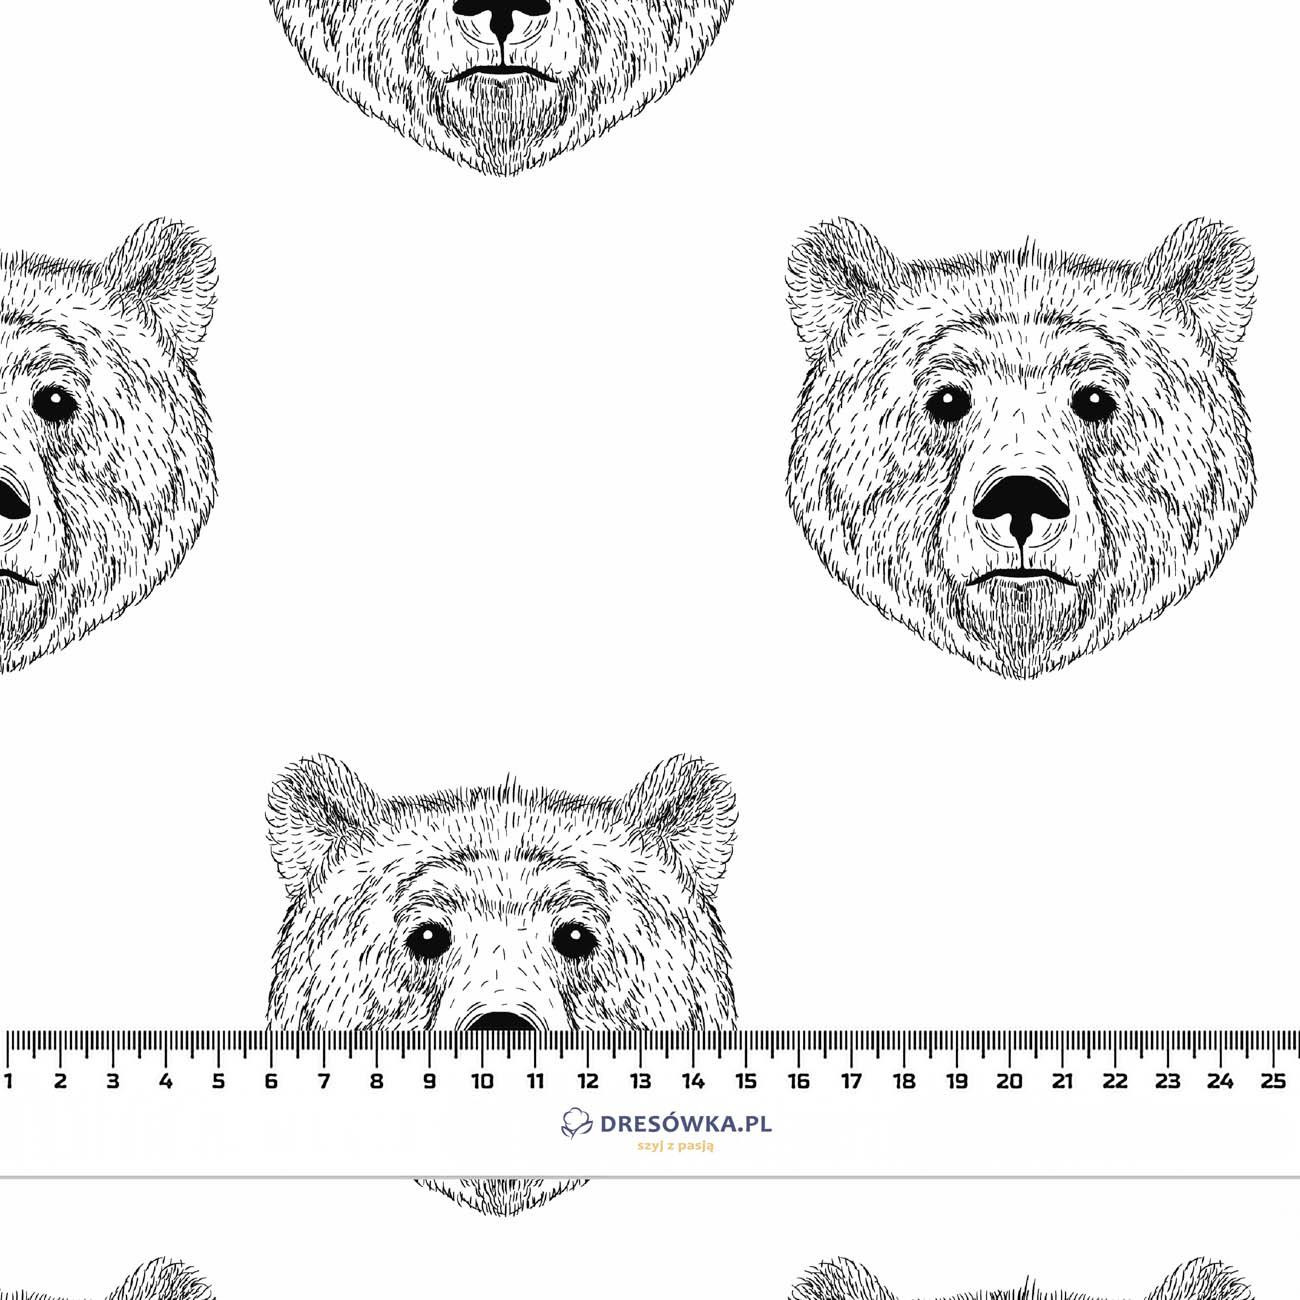 BEARS (heads) - Waterproof woven fabric